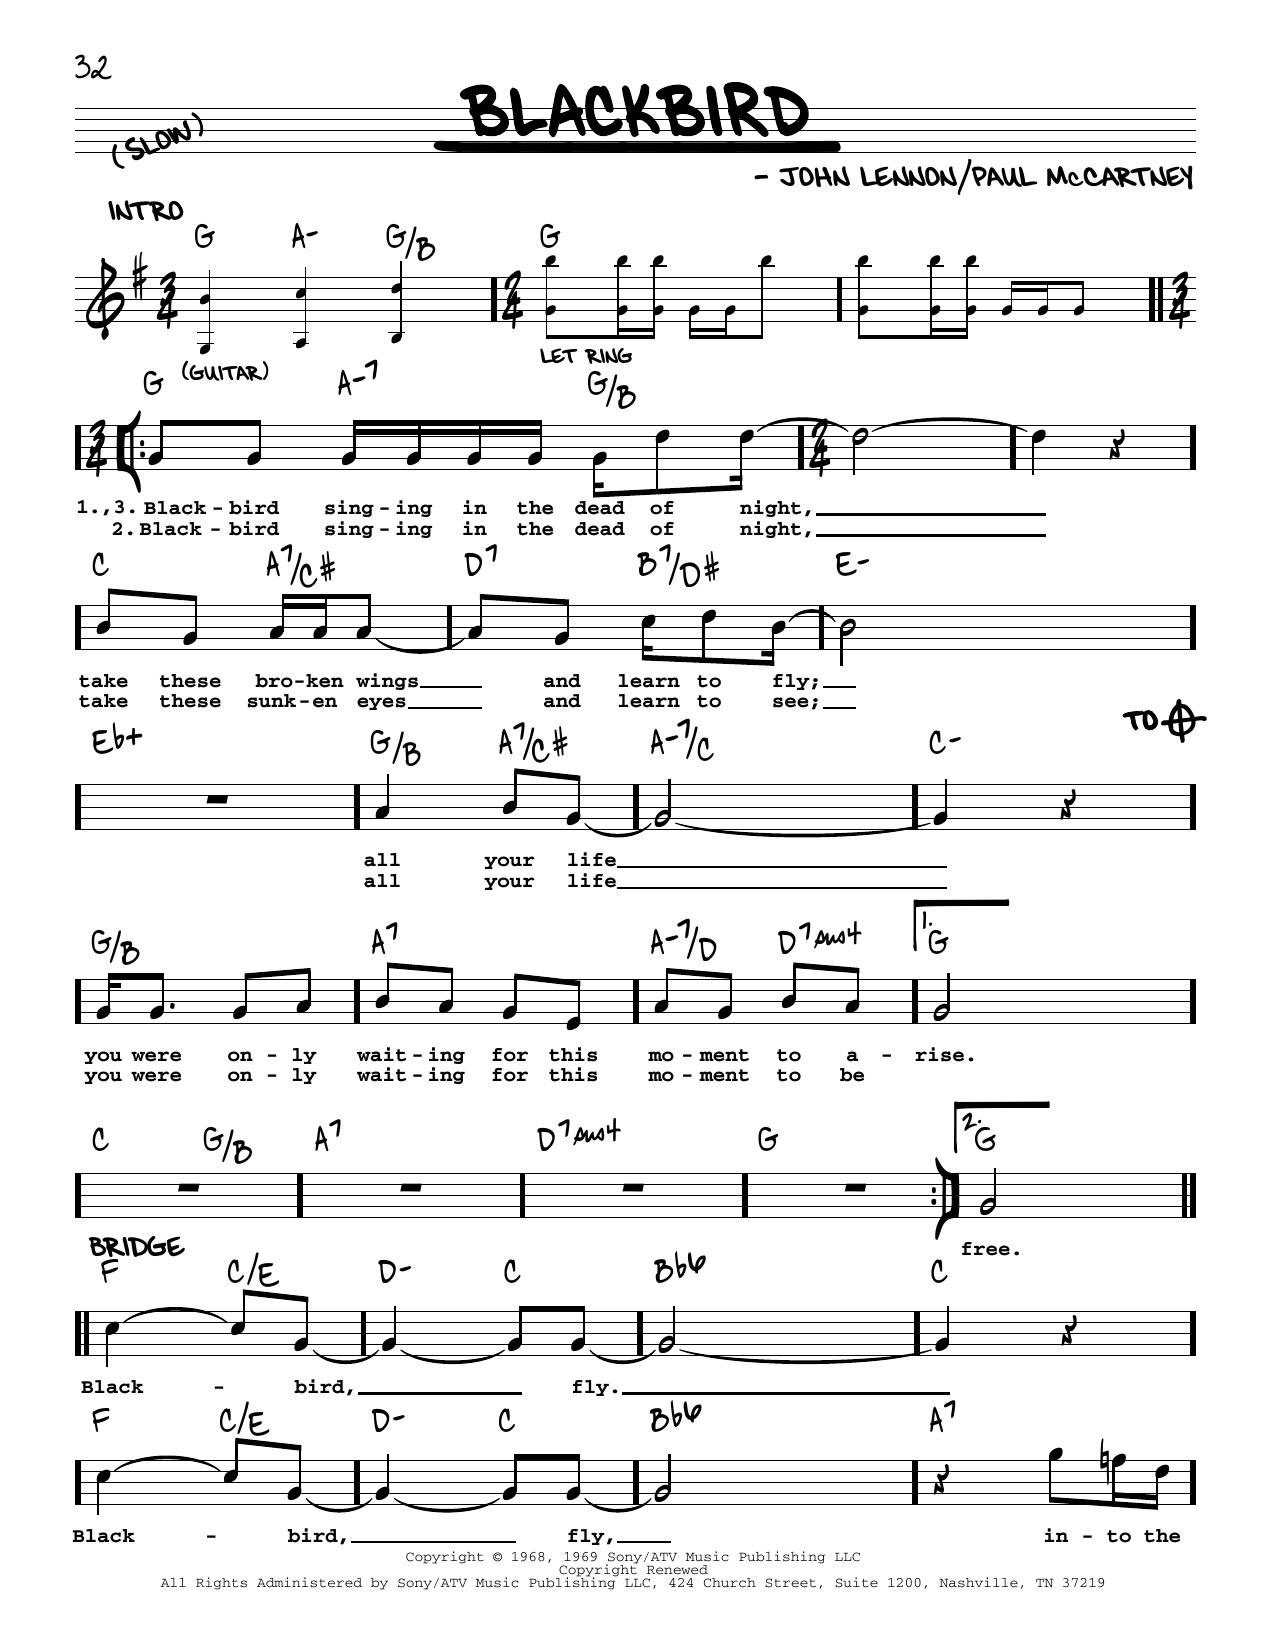 The Beatles Blackbird [Jazz version] Sheet Music Notes & Chords for Real Book – Melody, Lyrics & Chords - Download or Print PDF